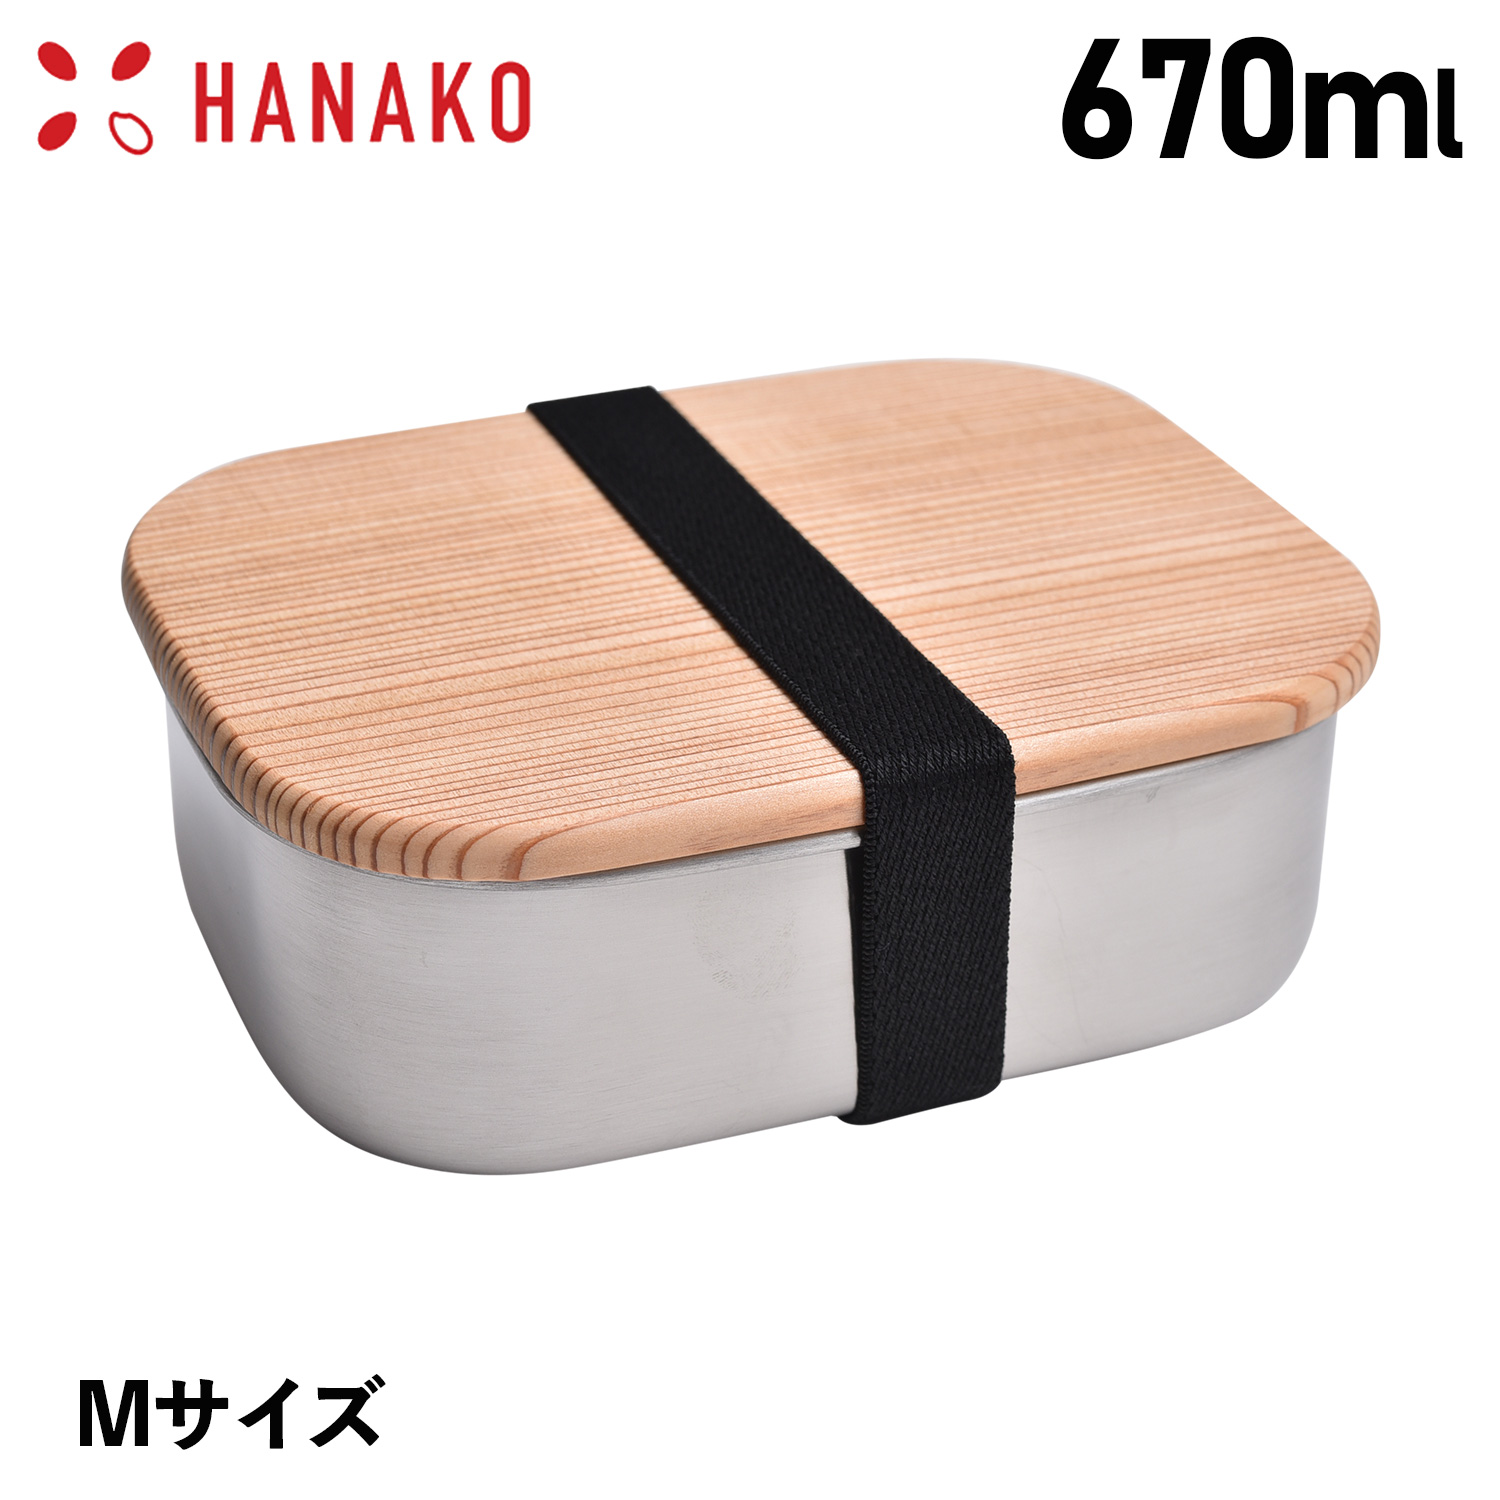 HANAKO ハナコ ステンレス 弁当箱 ランチボックス 木蓋付きフードボックス 670ml 角型 １段 日本製 FOOD BOX STAINLESS M シルバー 62036